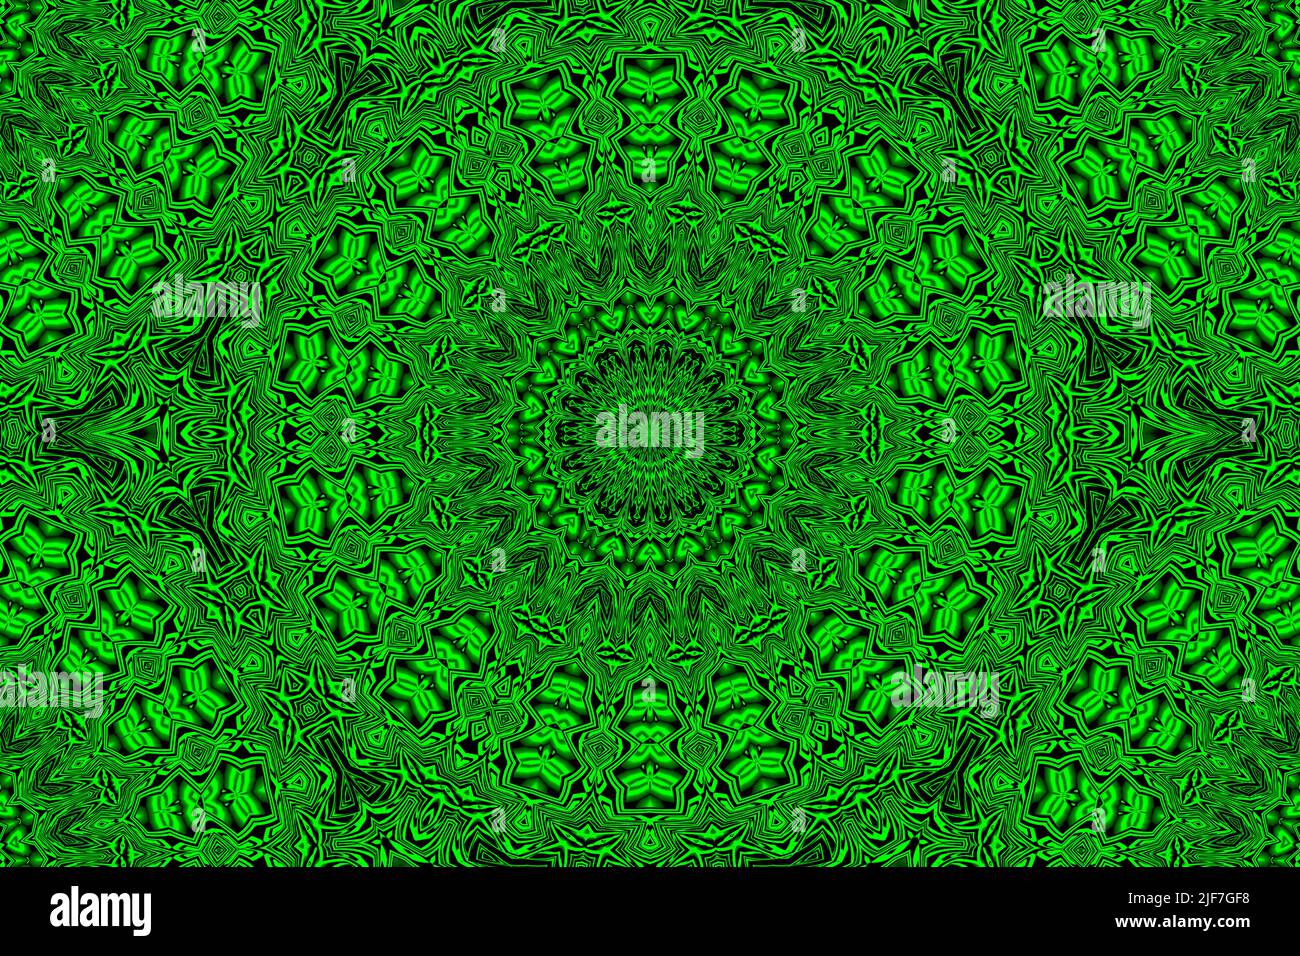 Digital art, 3d illustration. Abstract green and black kaleidoscope, geometric symmetrical background Stock Photo